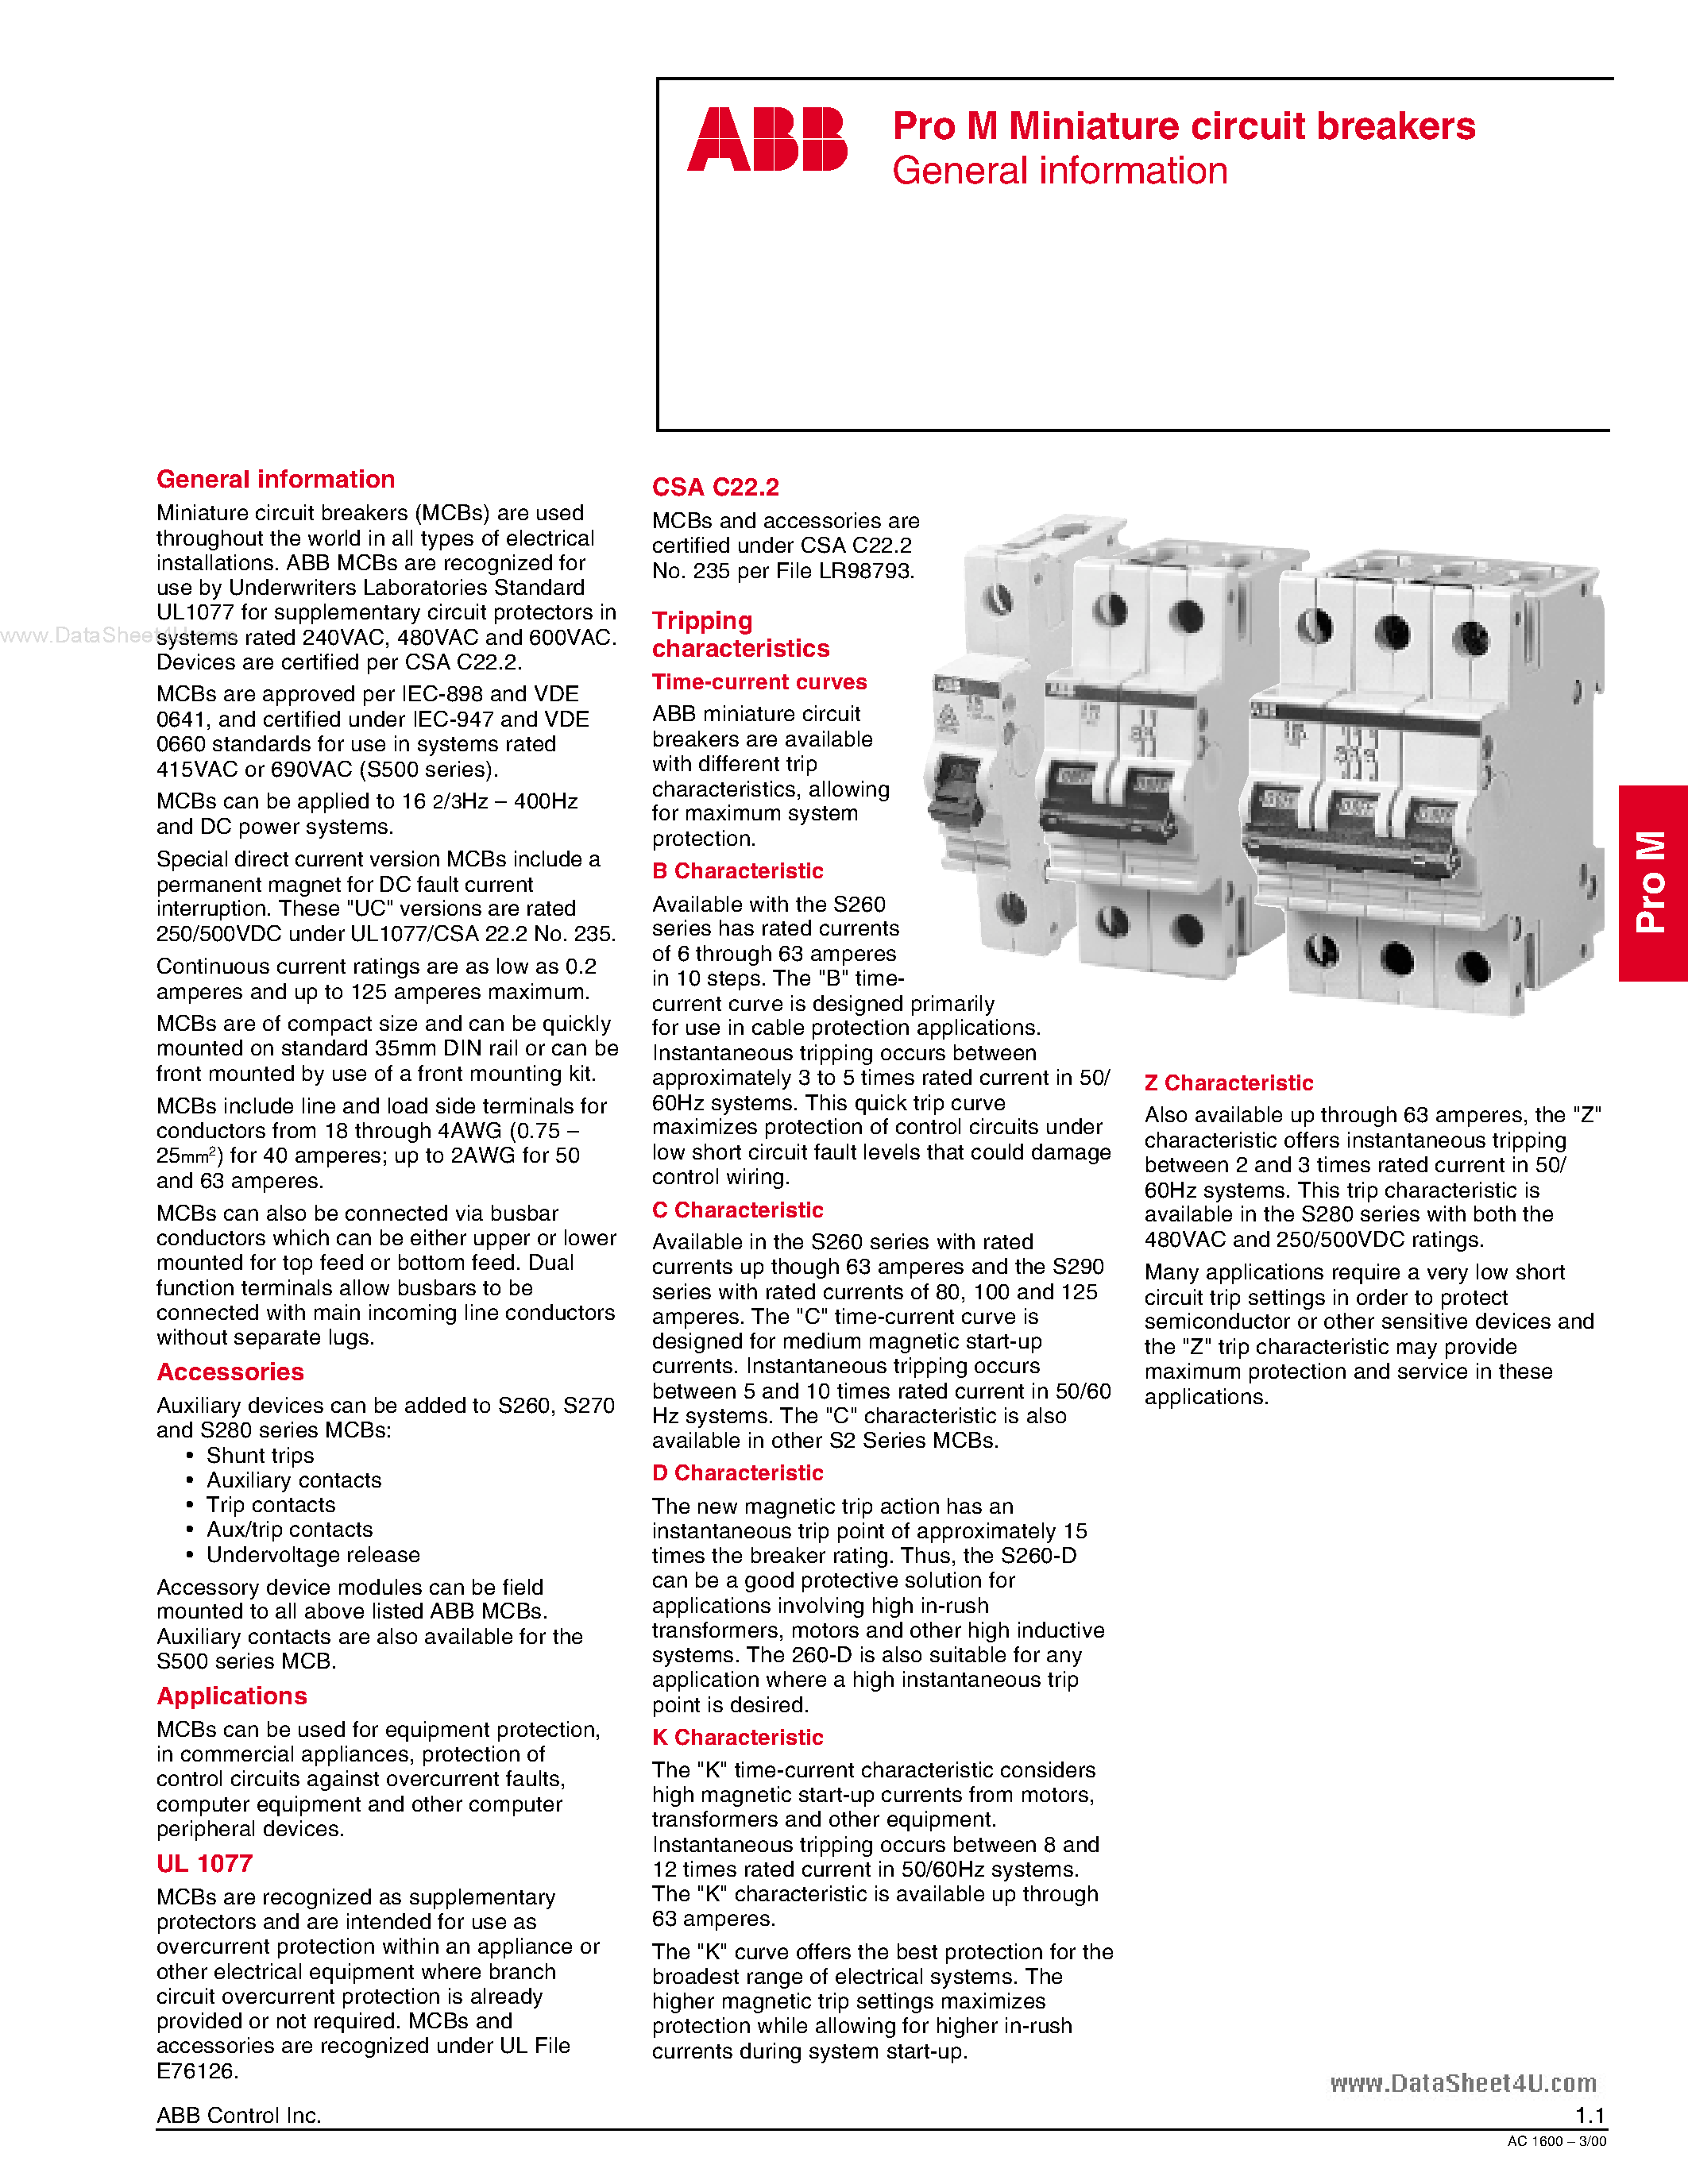 Даташит S291-C125 - Pro M Miniature Circuit Breakers страница 1